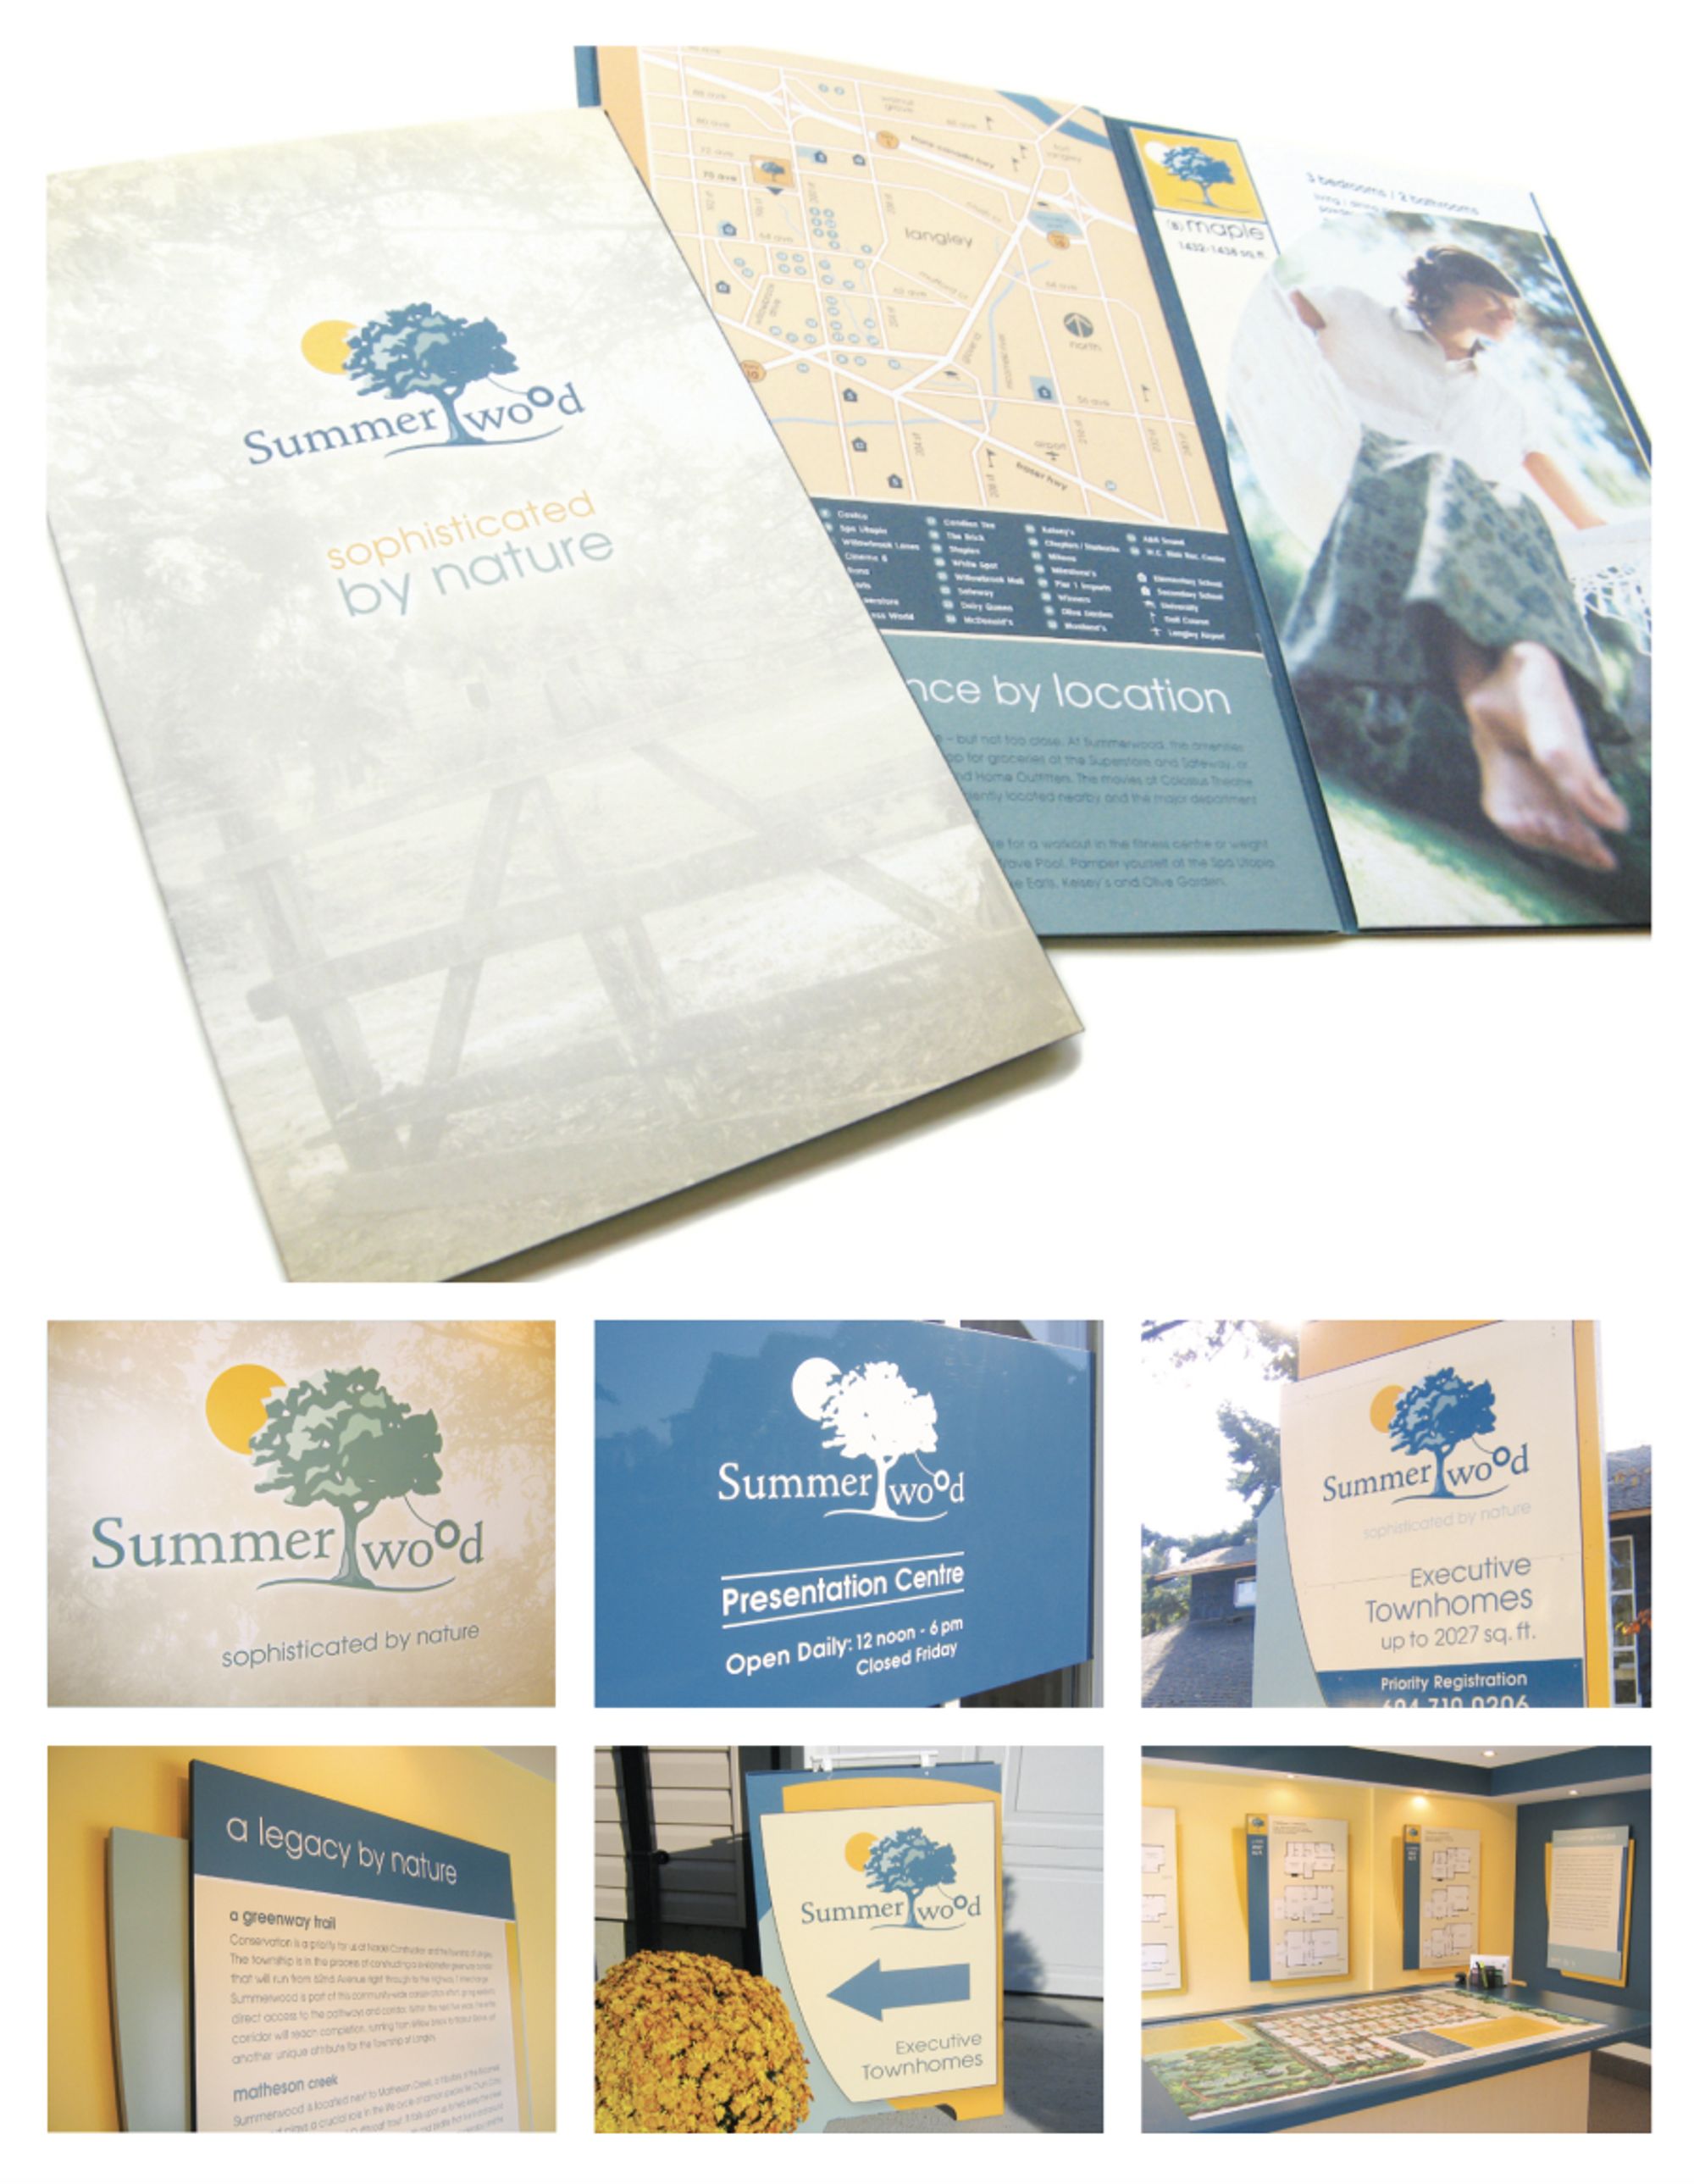 Brochures, signage, and presentation centre design for the Summerwood real estate development